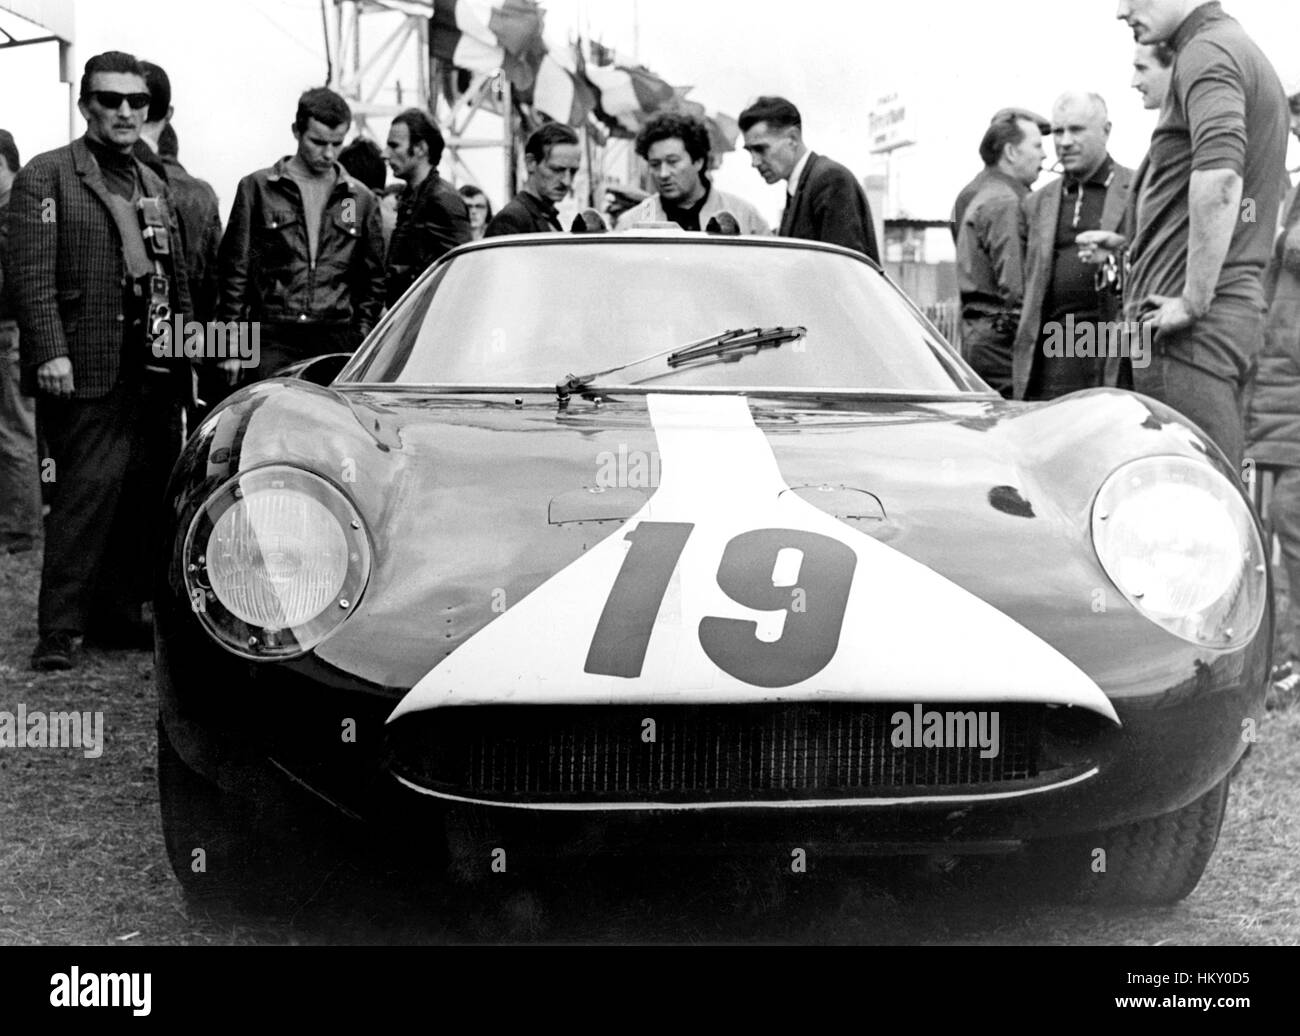 1968 Paul Vestey GB Ferrari 250LM Le Mans 24 Hours Scrutineering GG Stock Photo